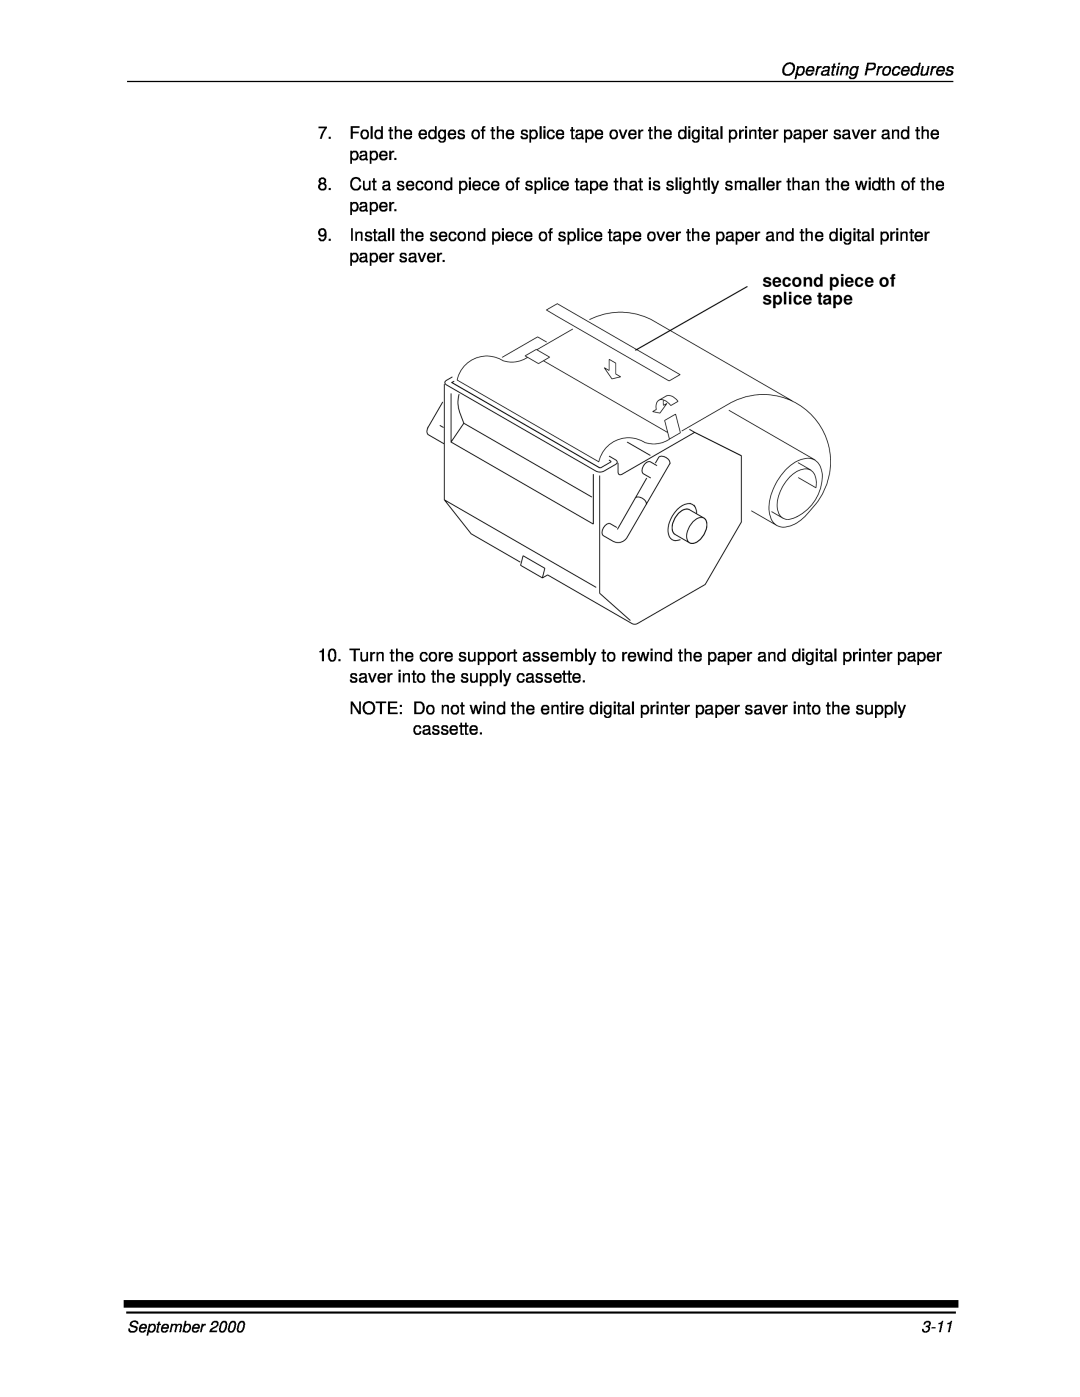 Kodak 20R manual Operating Procedures, second piece of splice tape, September, 3-11 